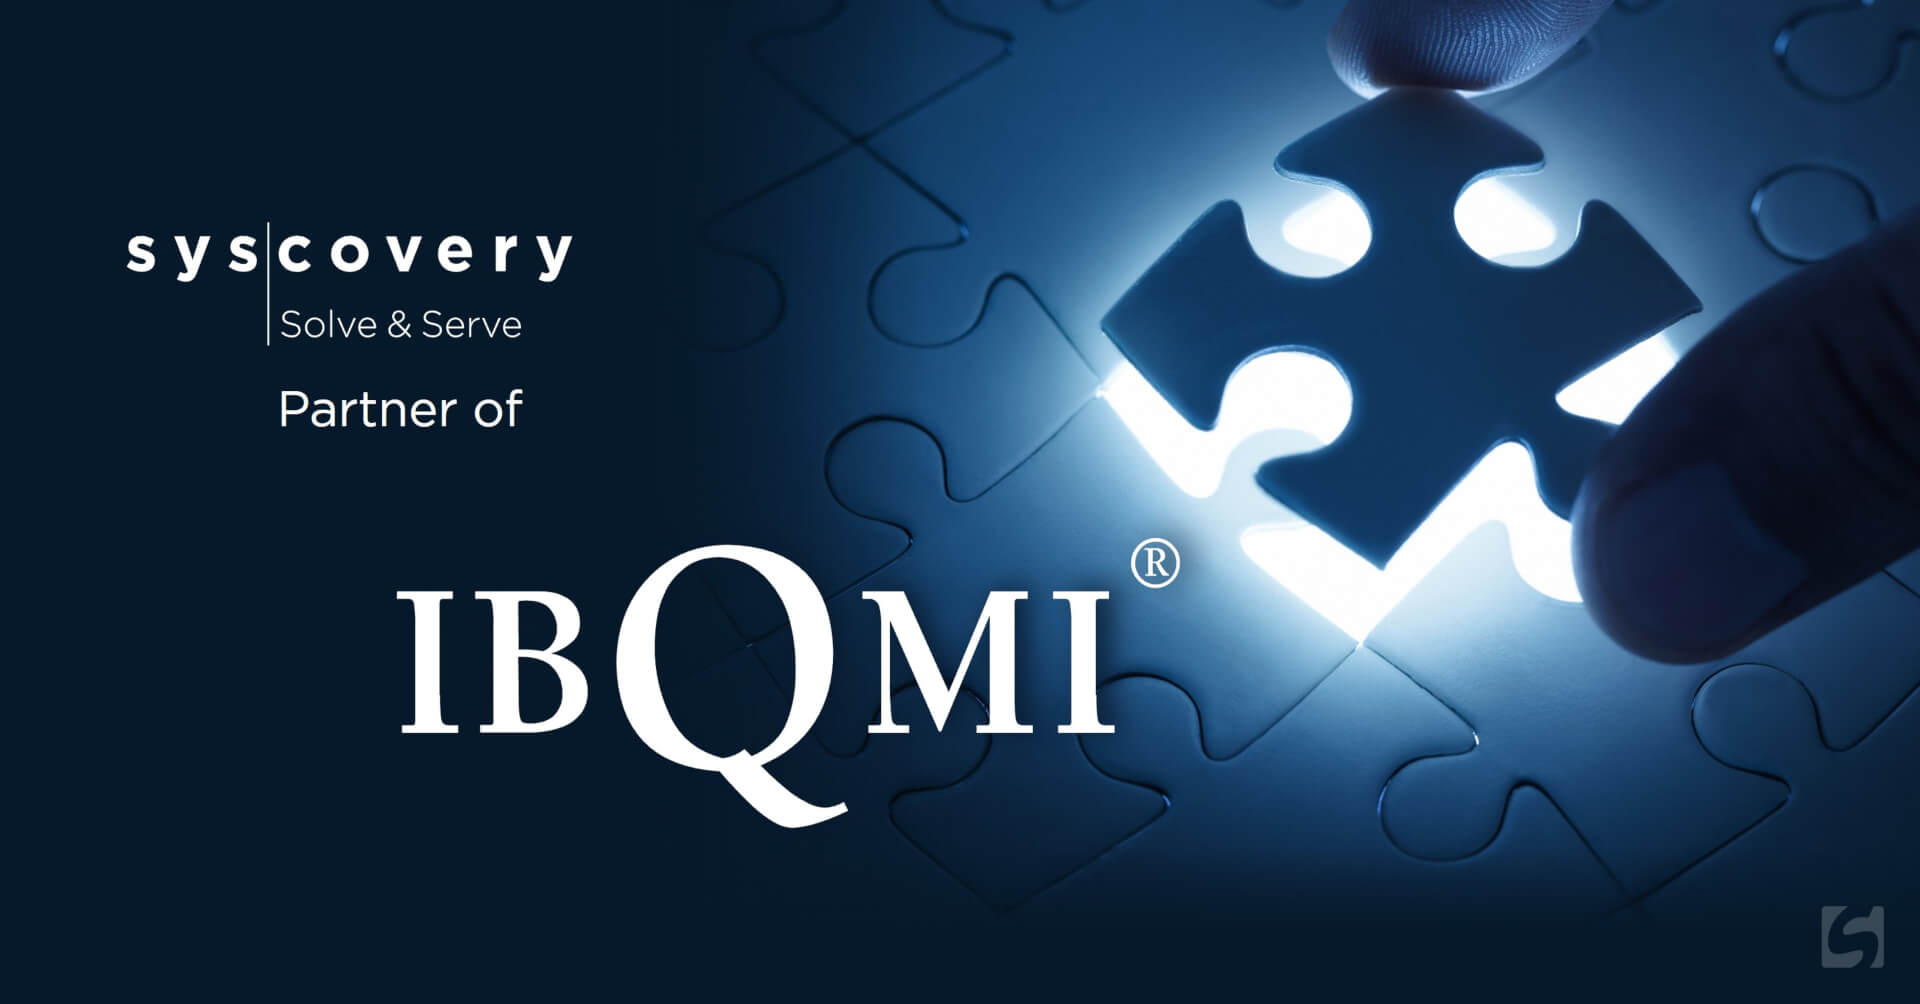  New partnership: Syscovery Solve & Serve & IBQMI